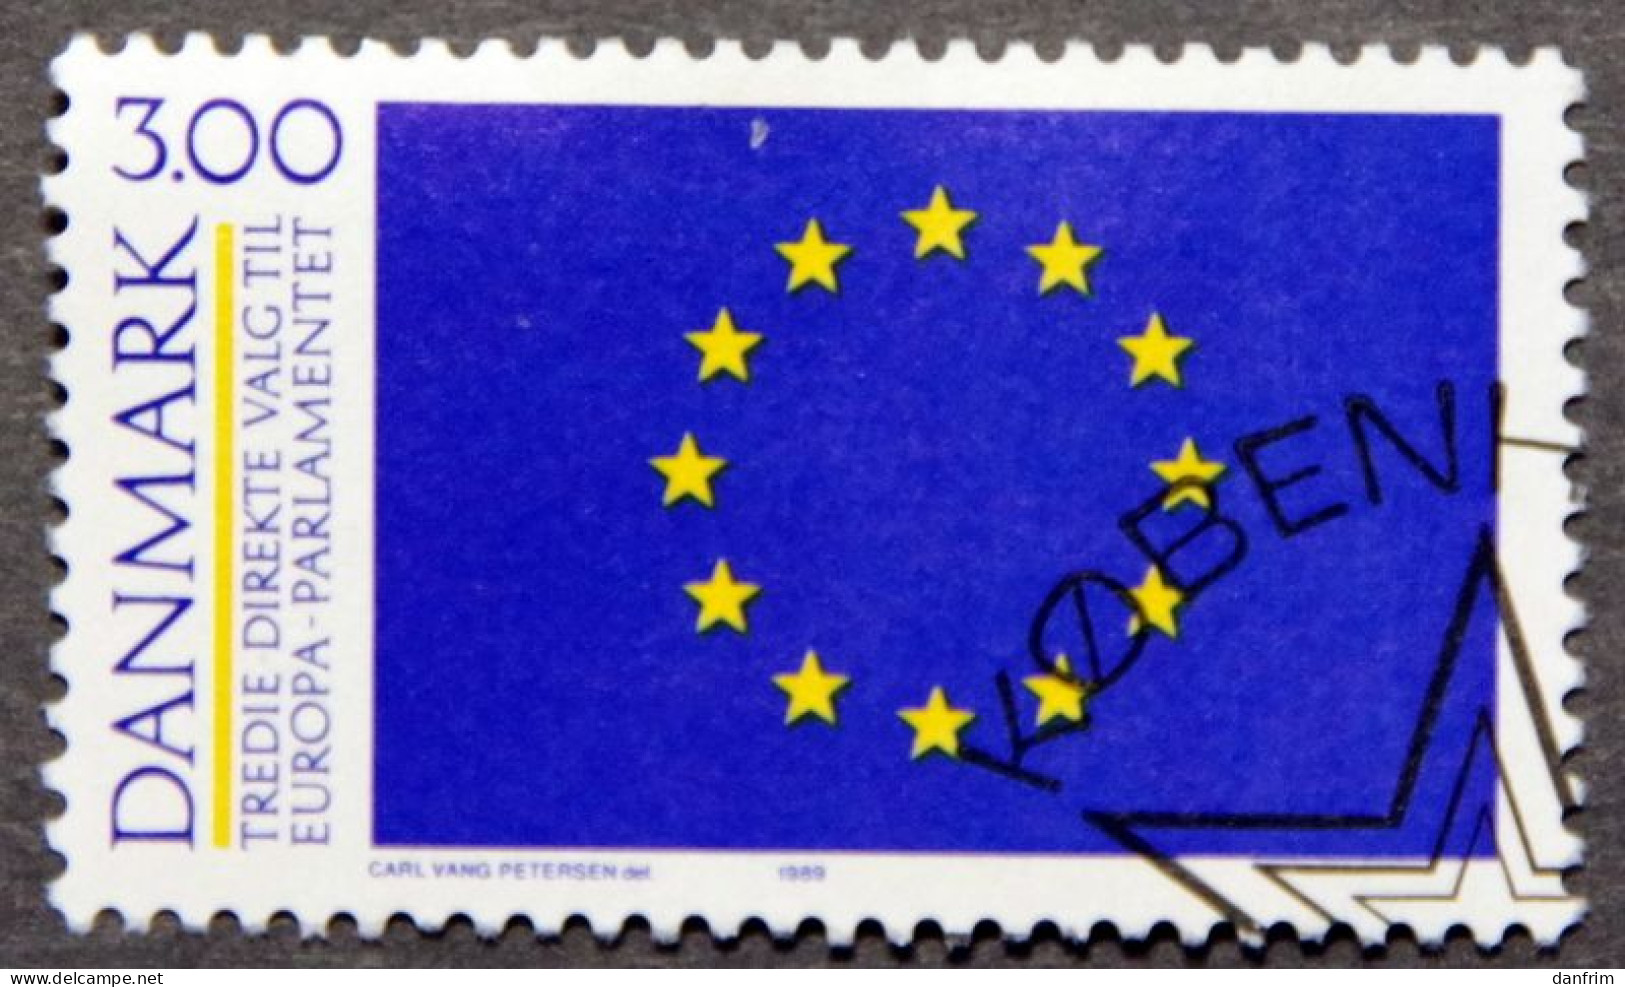 Denmark 1989 MiNr. 949 (O)  Europæiske Parlament ( Lot K 715) - Used Stamps